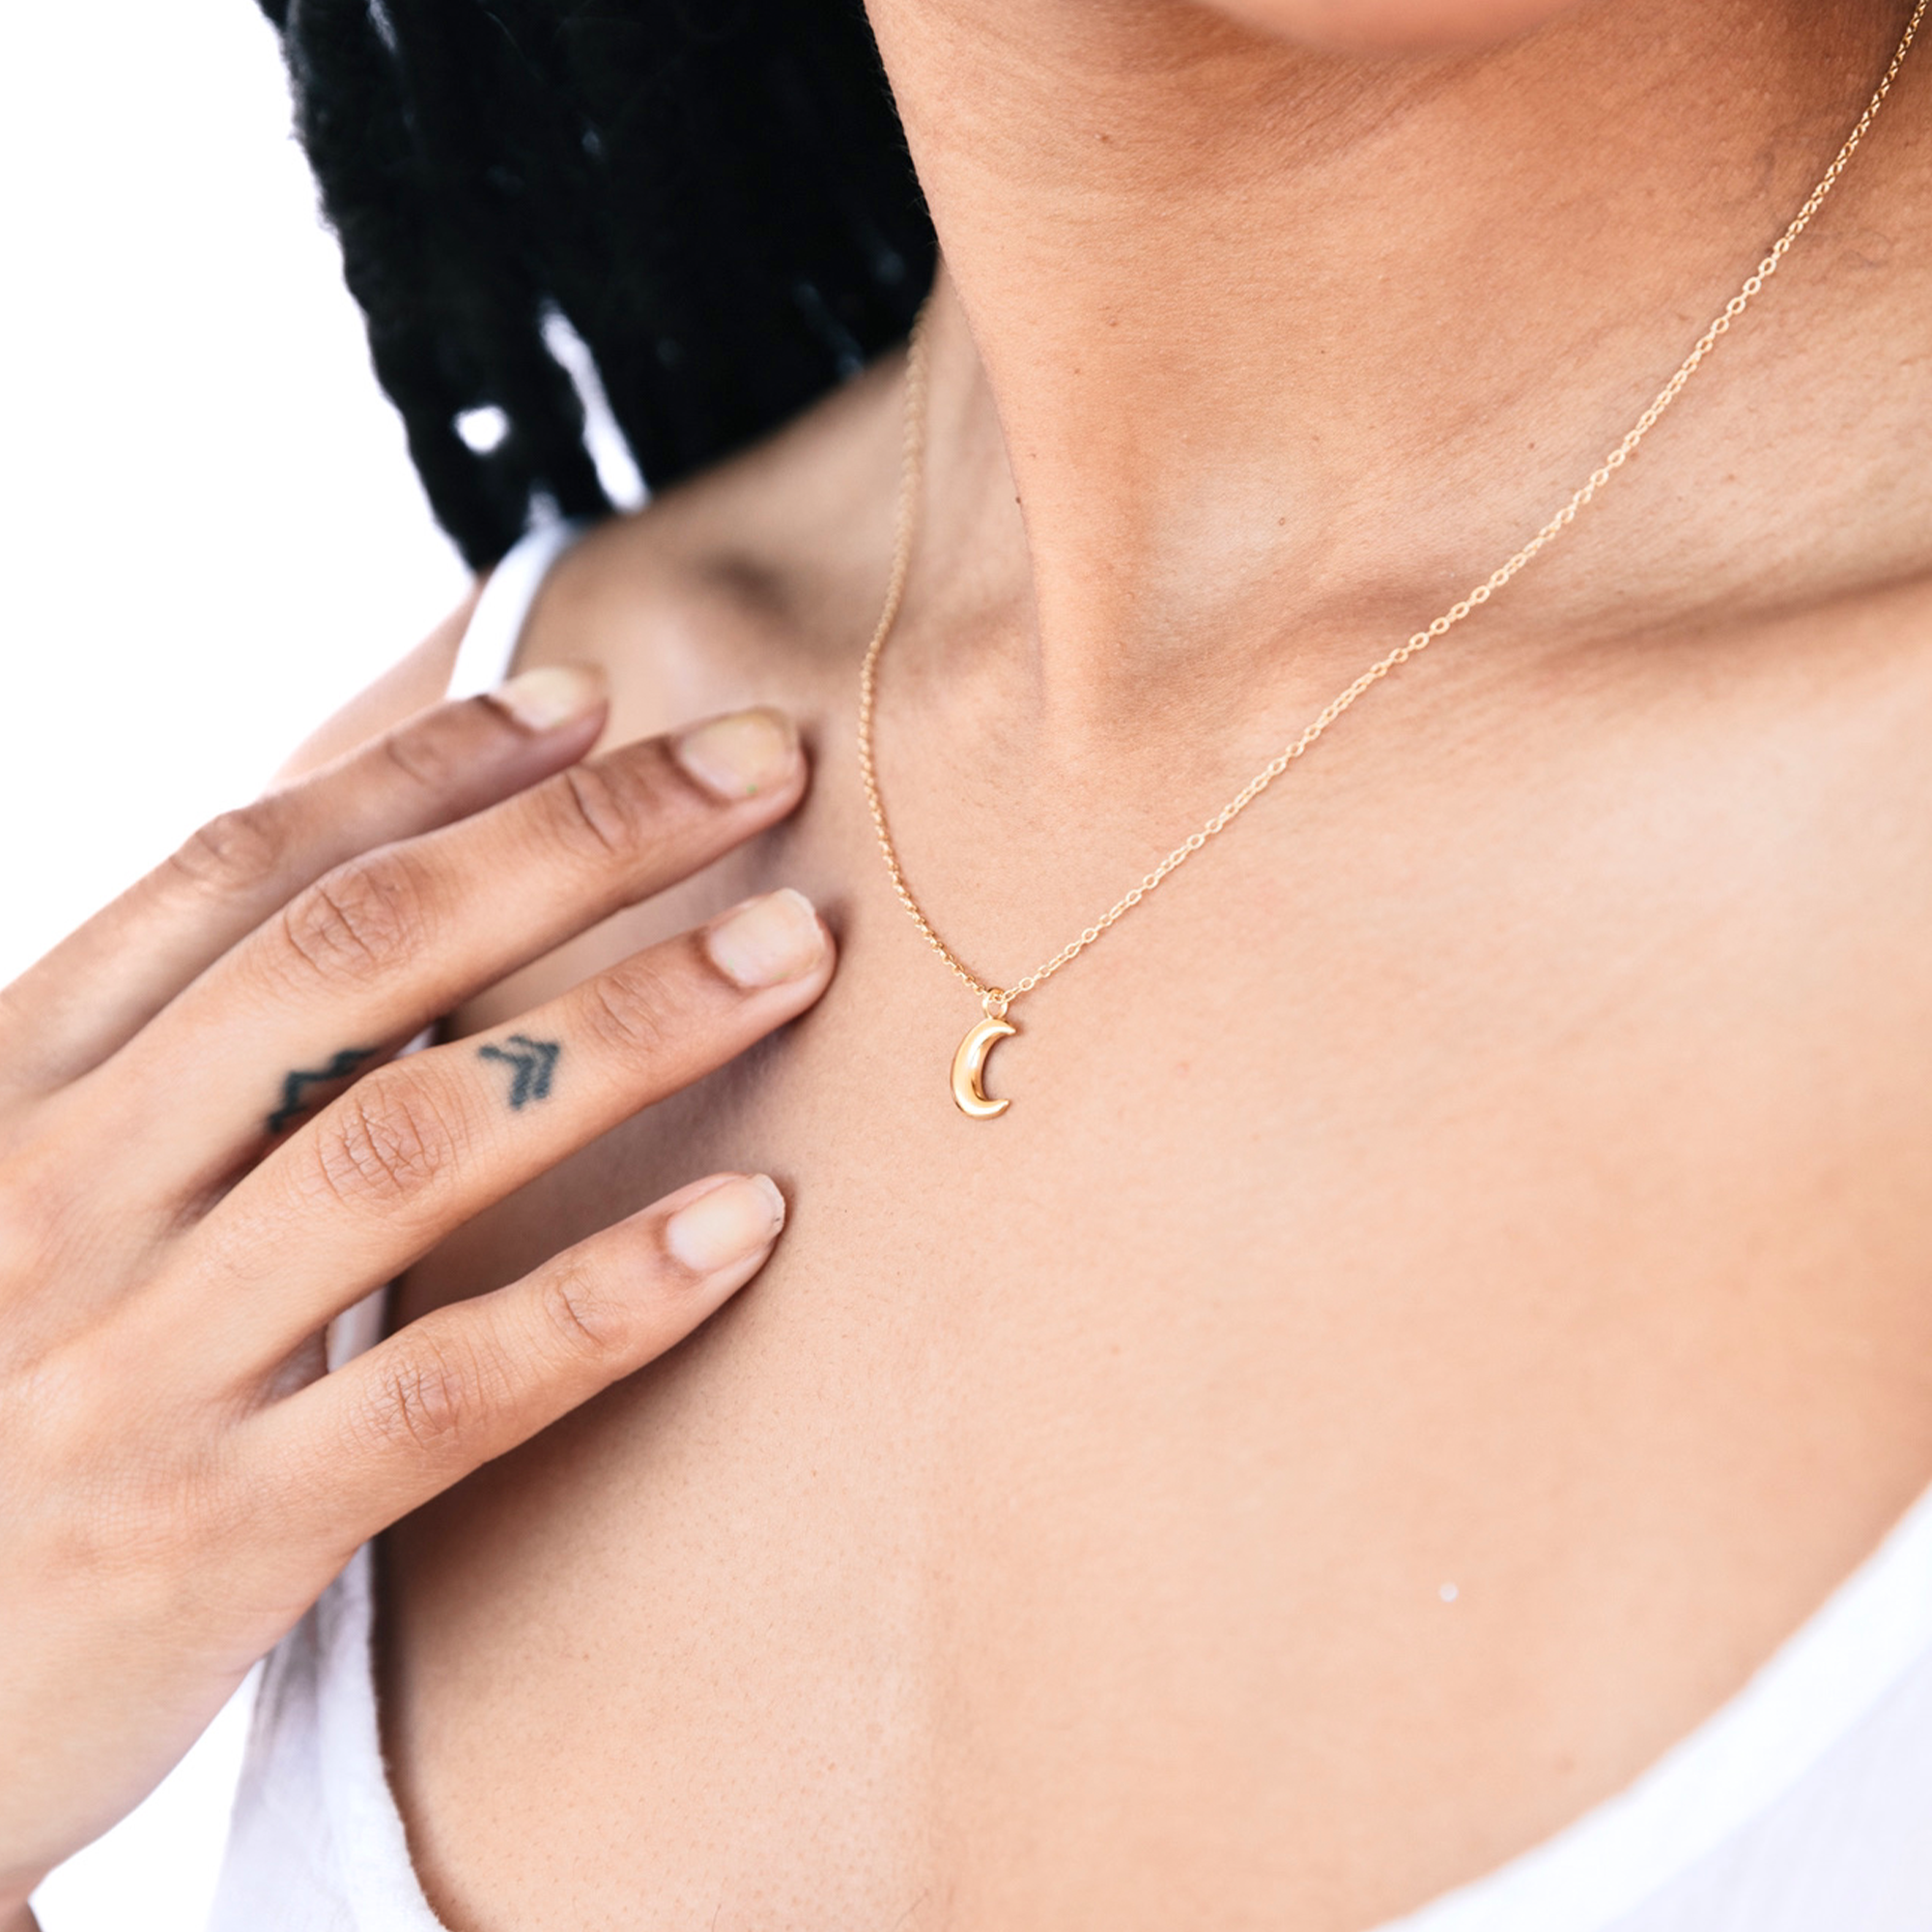 Nina Berenato Jewelry Medium Lock Necklace